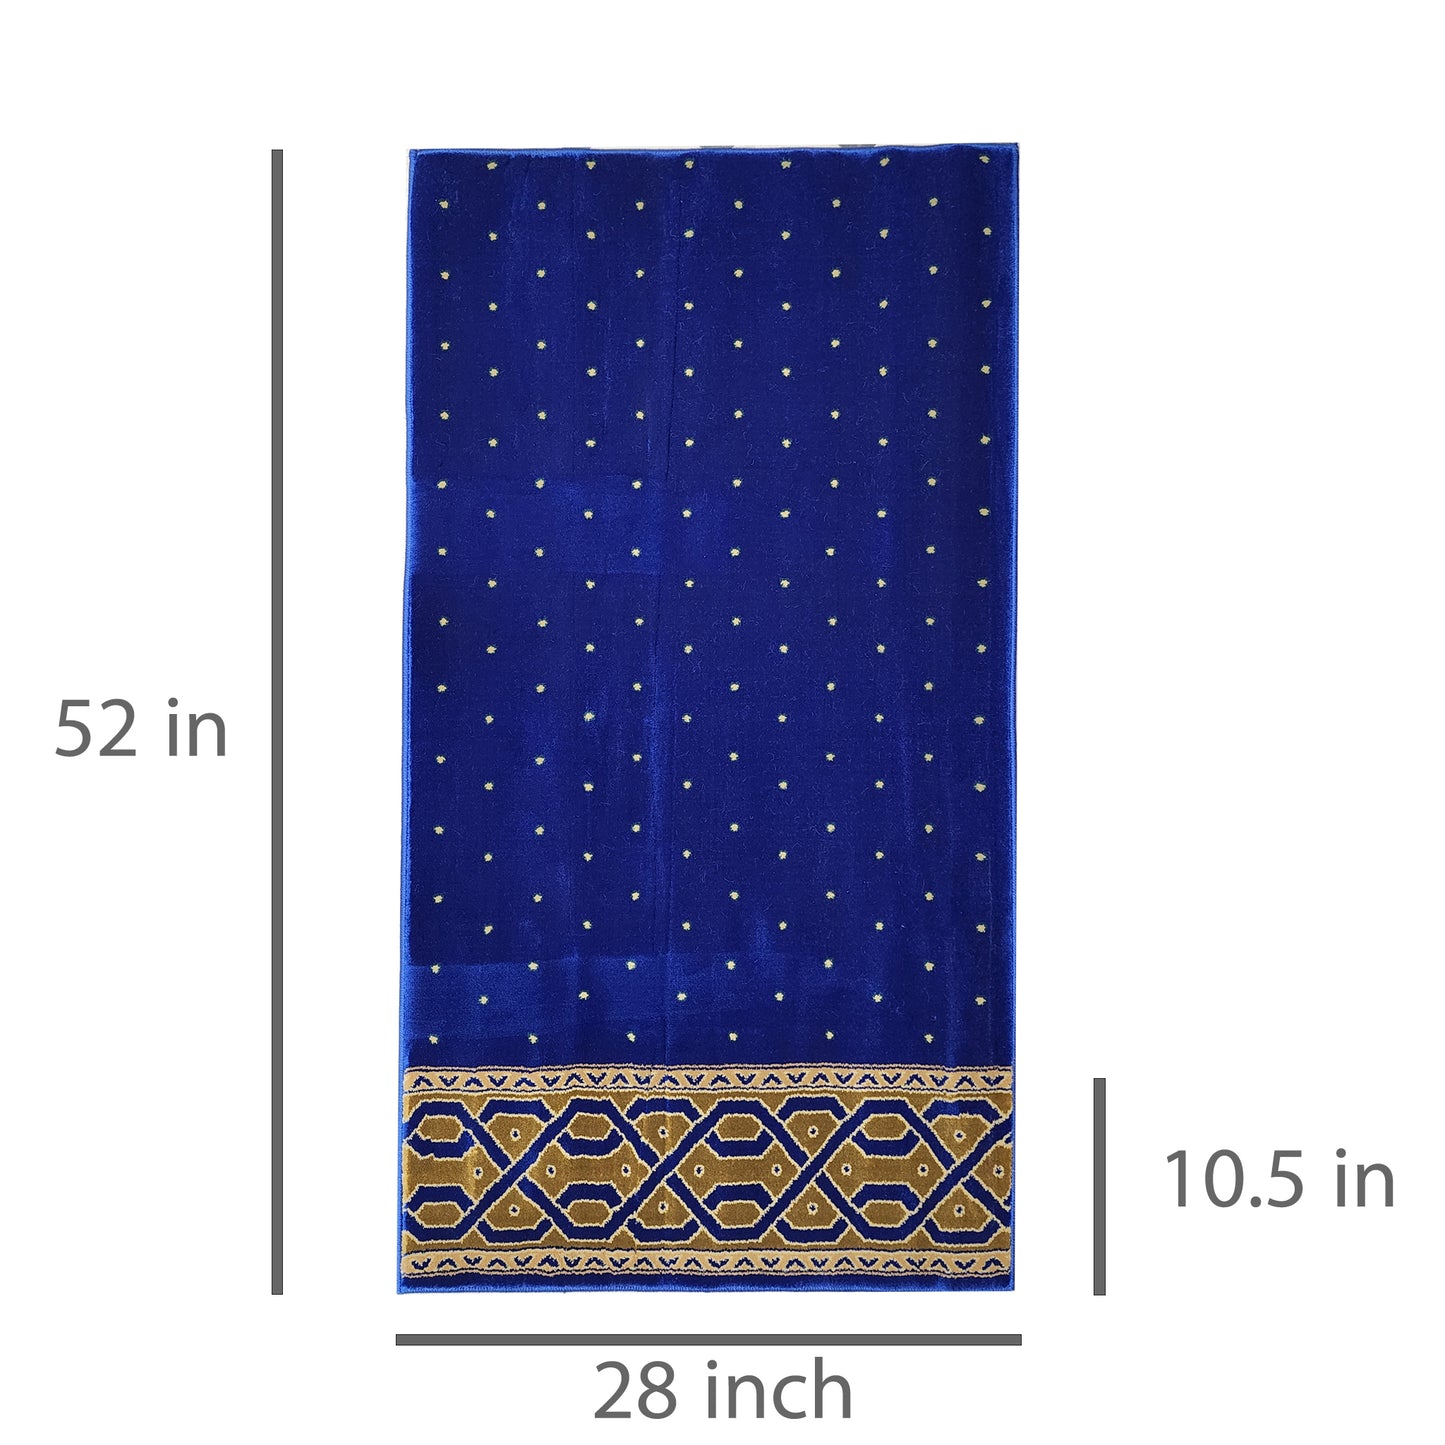 KHALID Navy Blue with Gold Border Single Prayer Carpet Mat